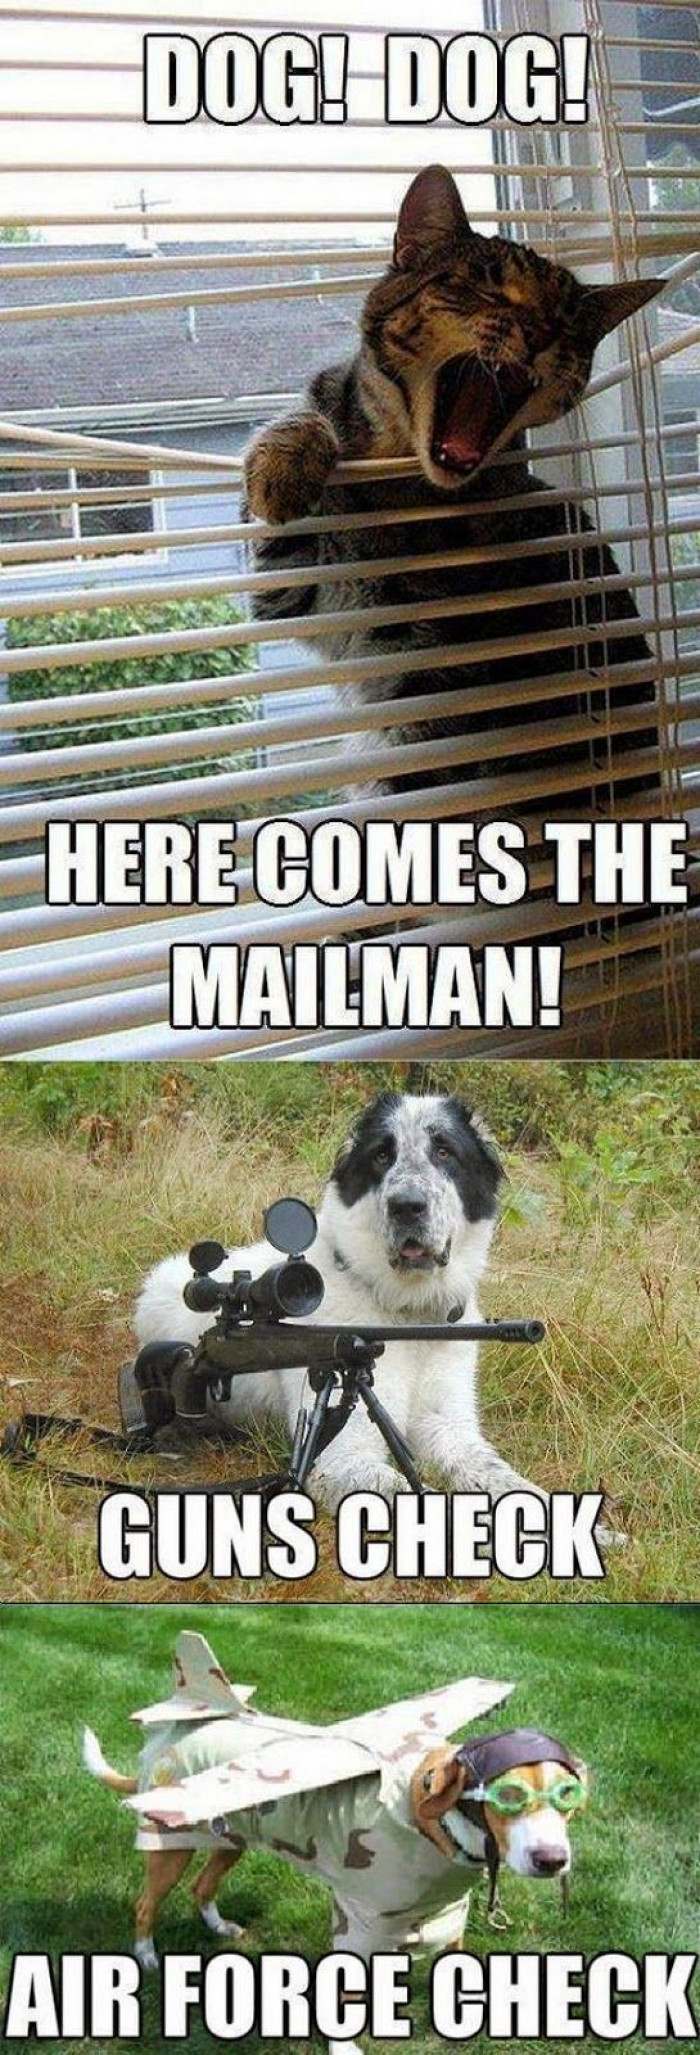 Mailman in sight